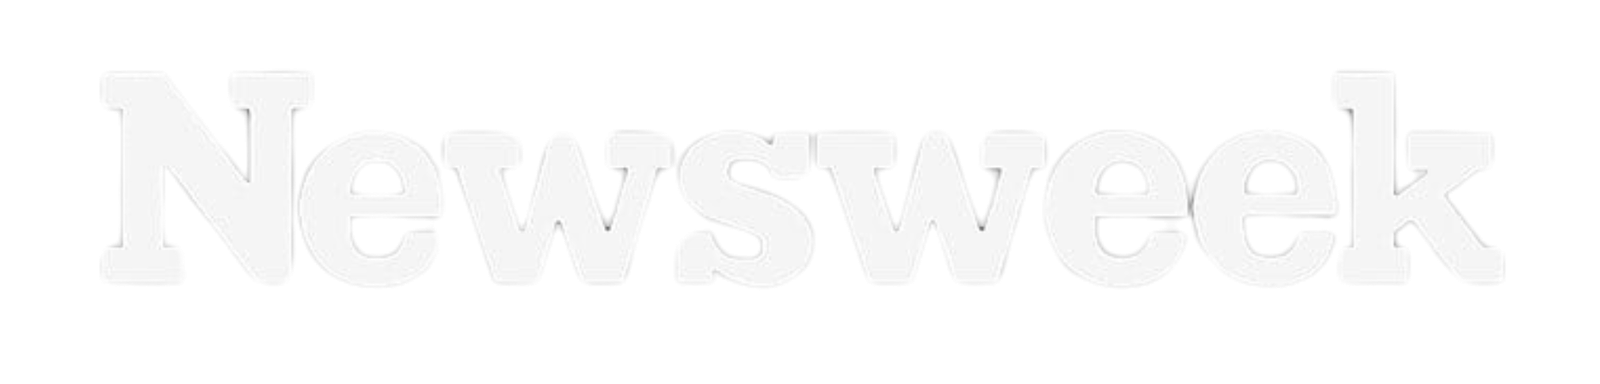 Newsweek logo Png